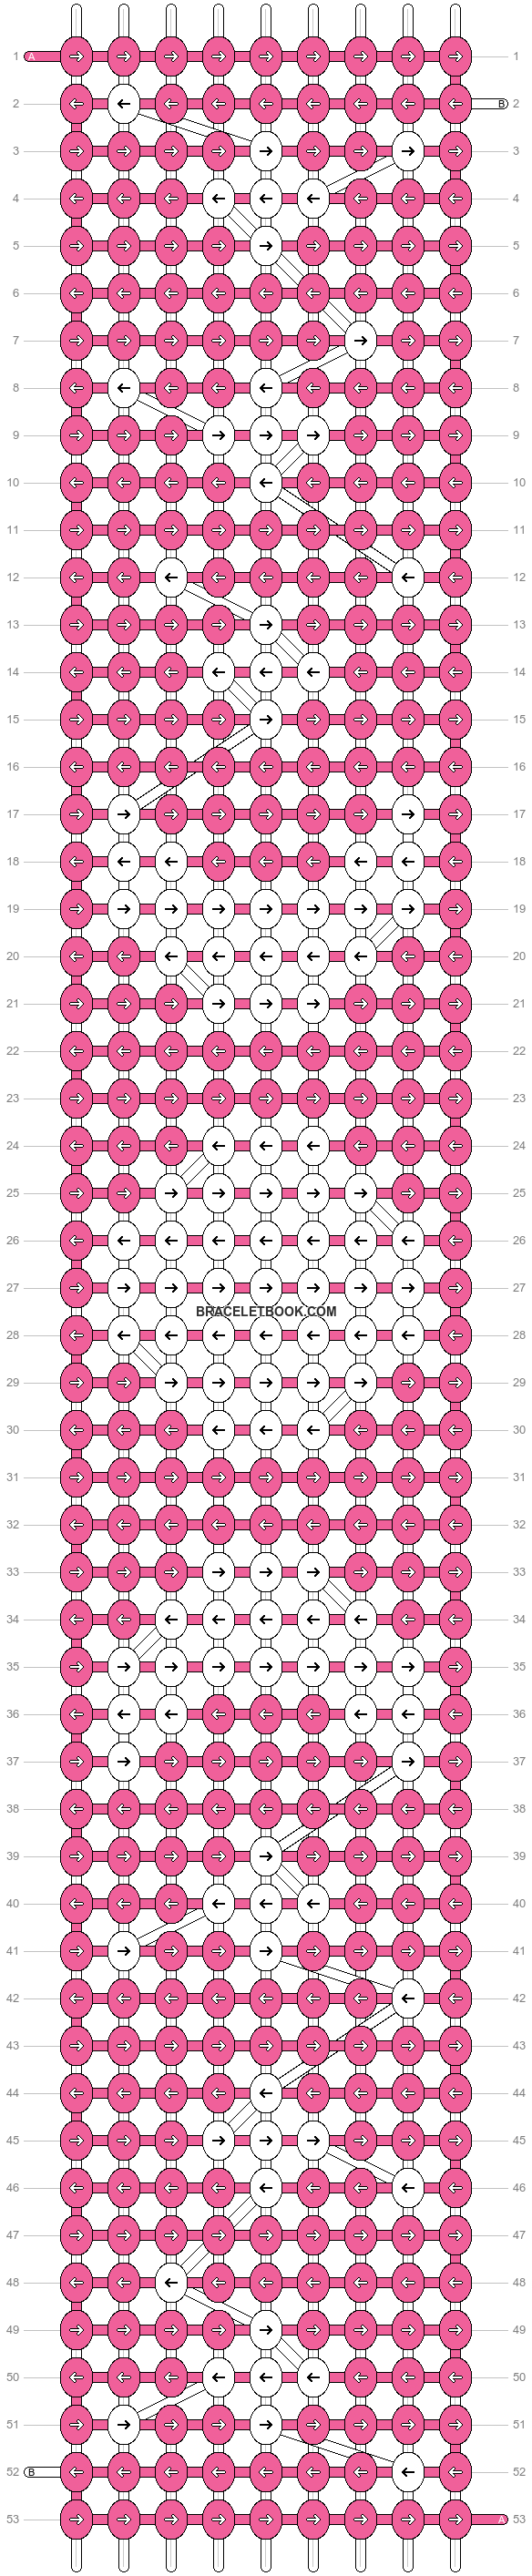 Alpha pattern #40067 variation #55890 pattern